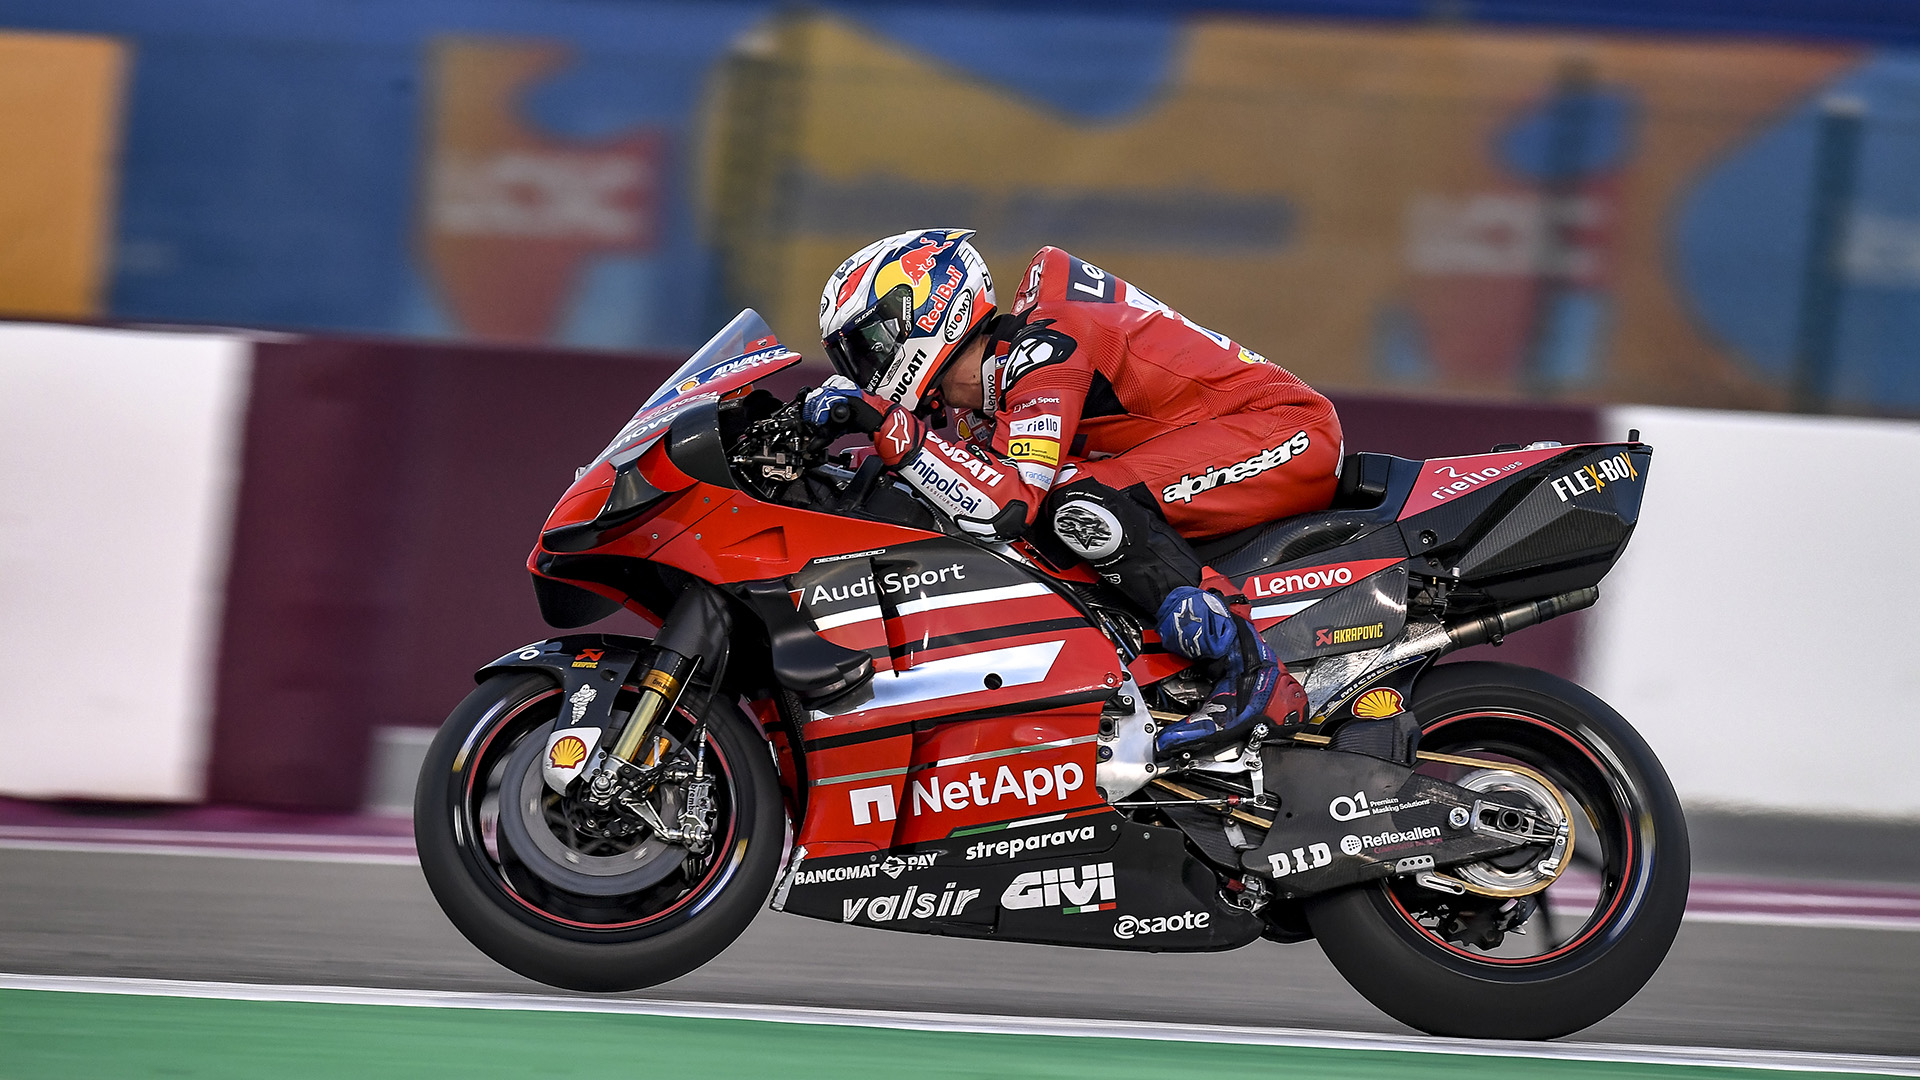 Ducati racing bike in action